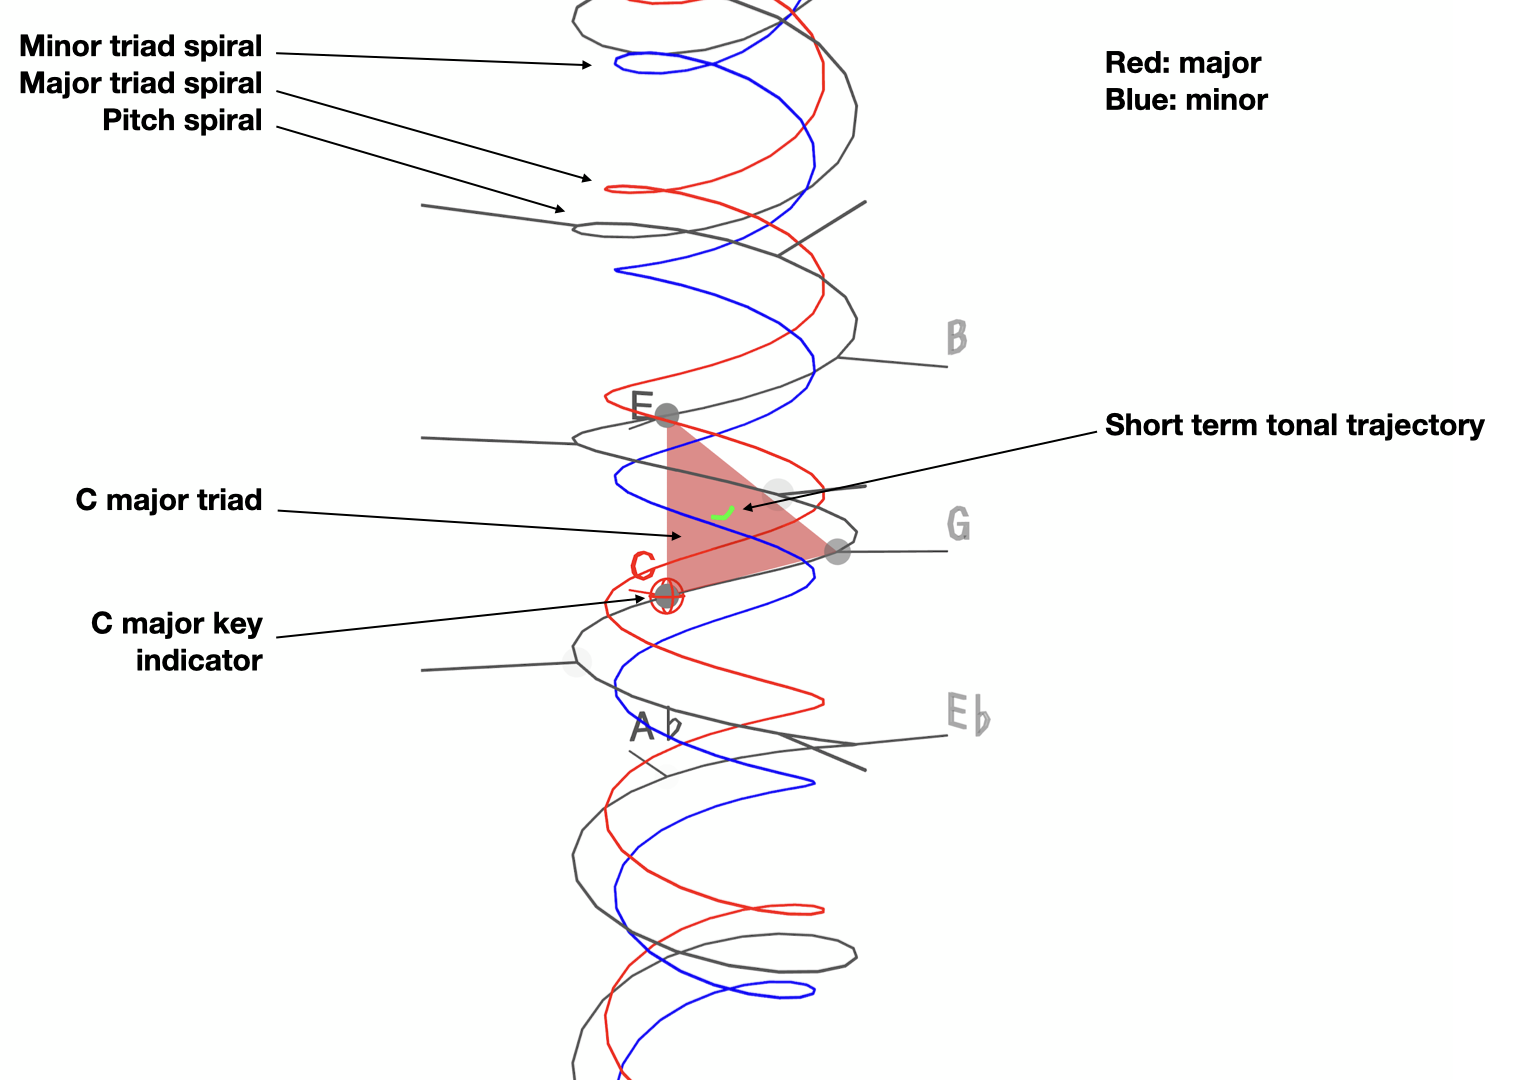 Spiral Array model of tonality